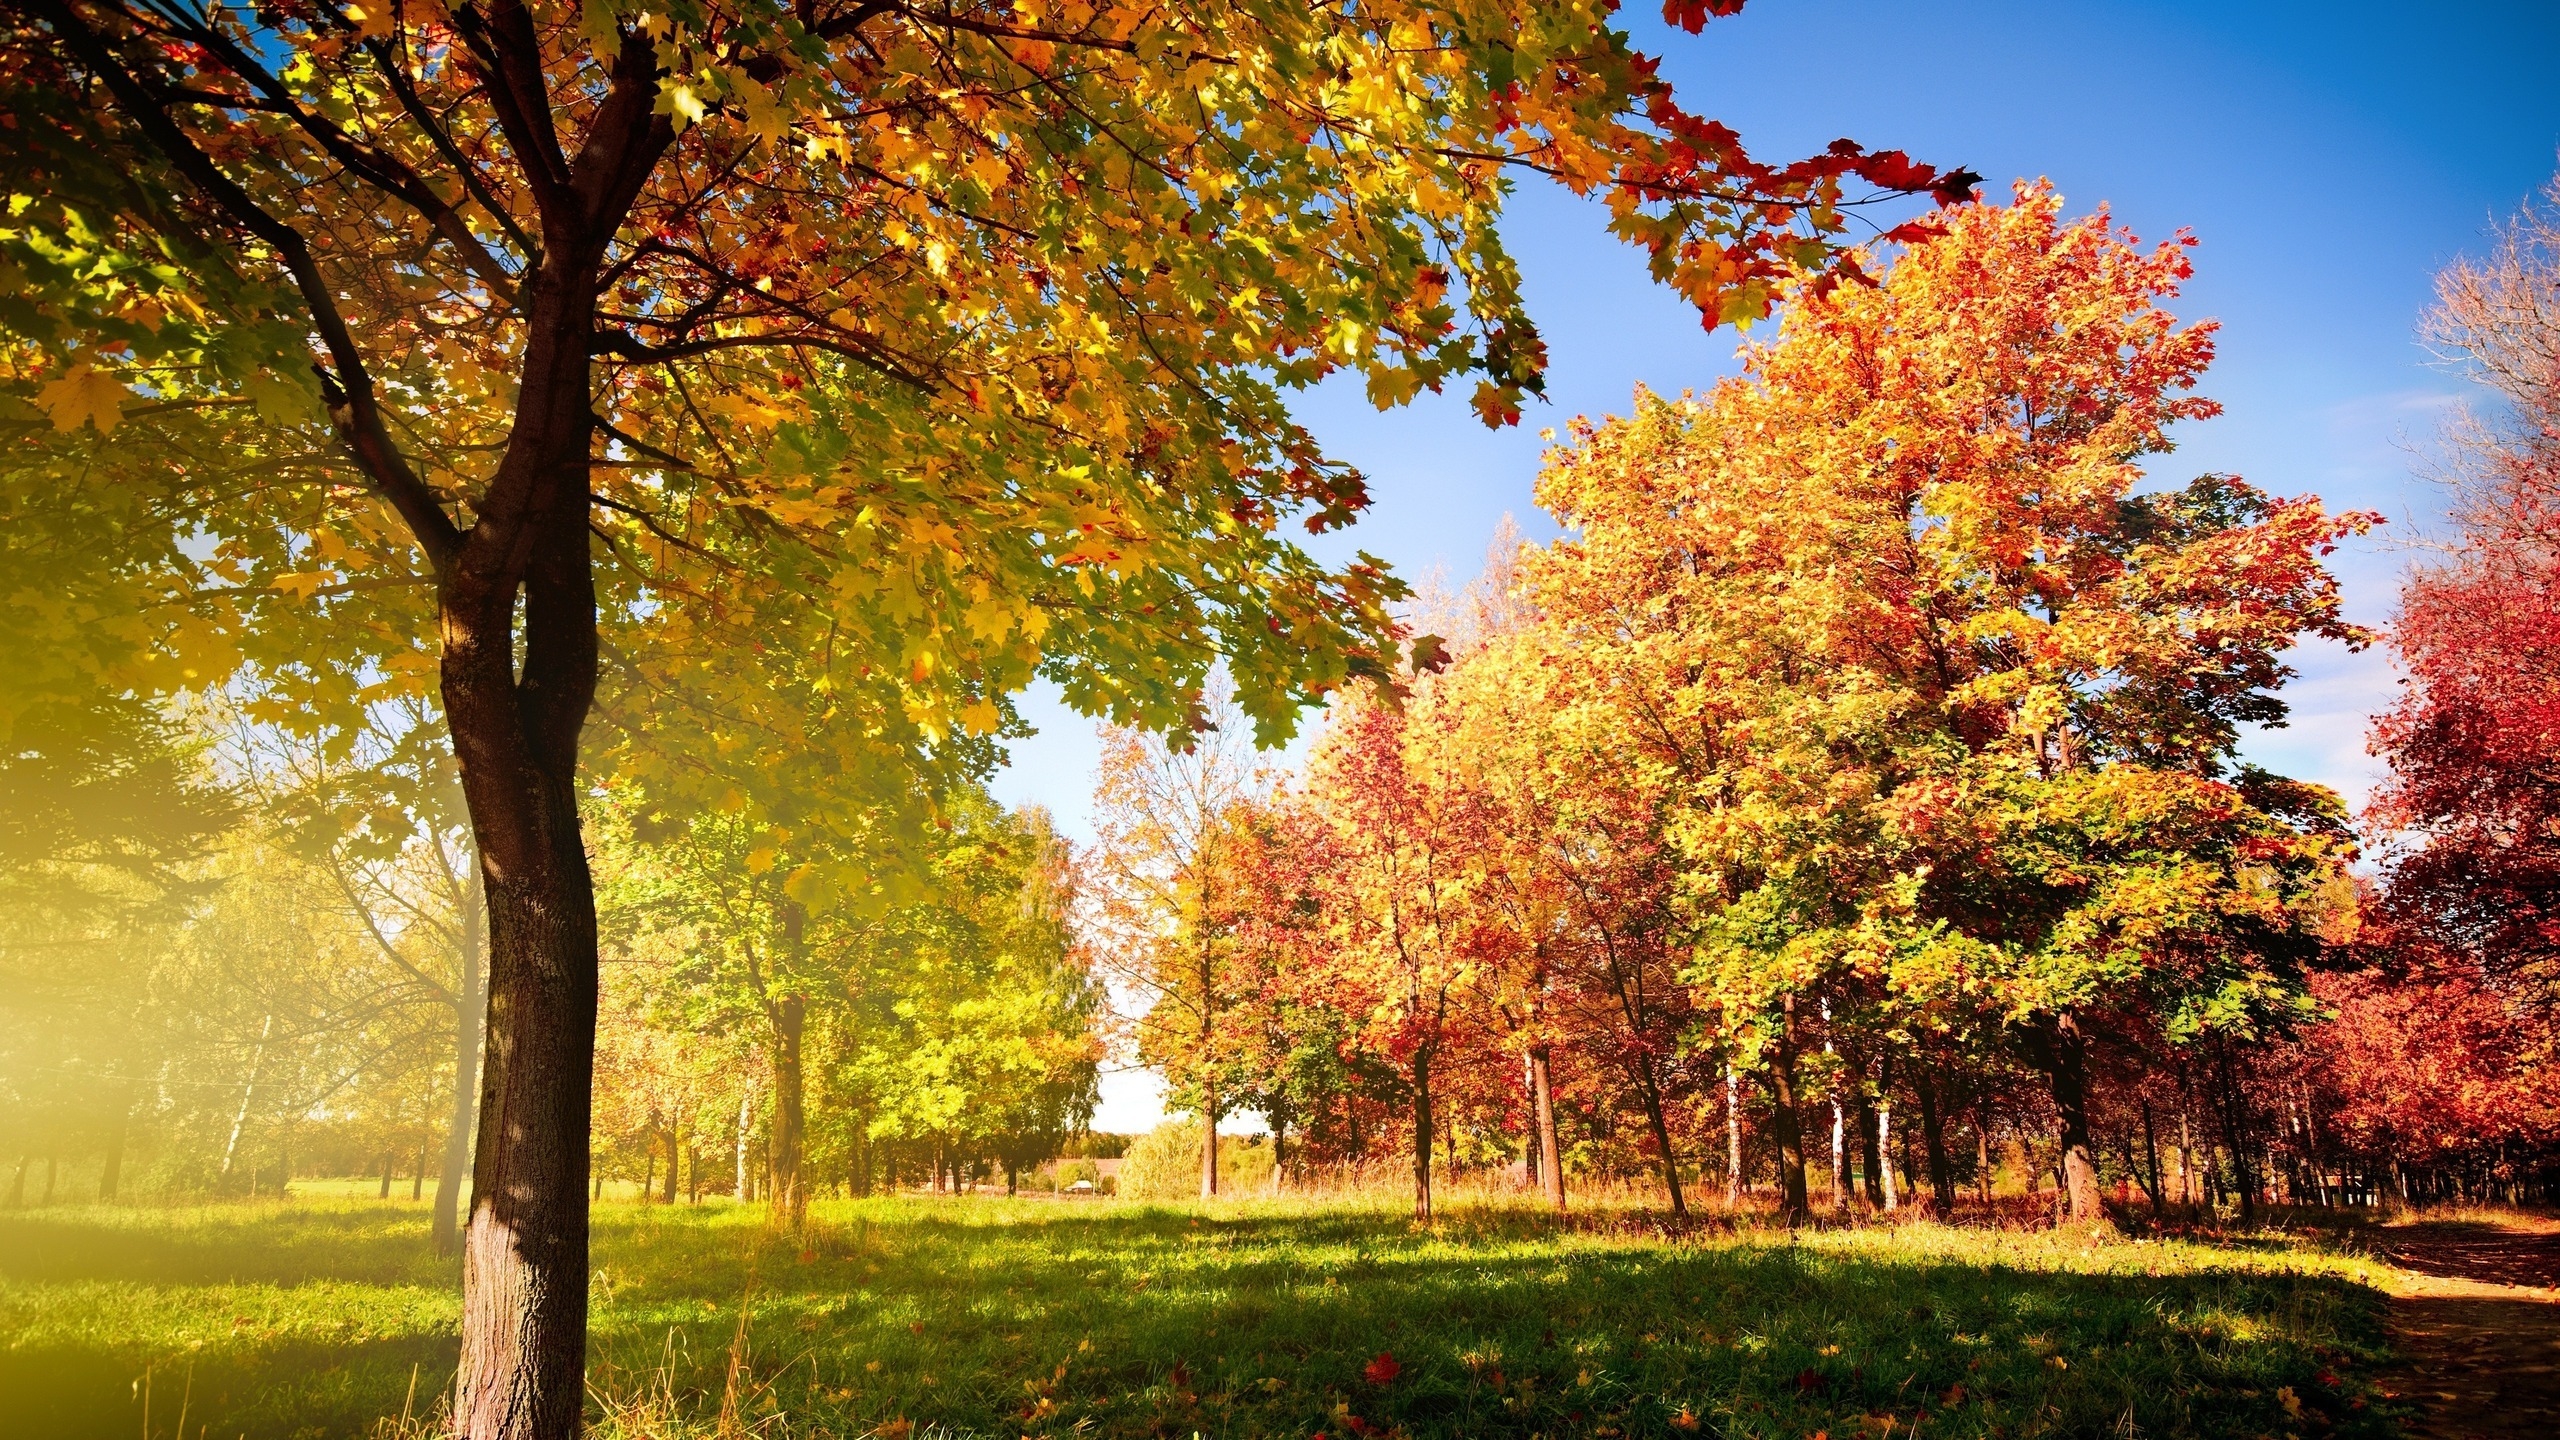 Colorful Autumn Landscape for 2560x1440 HDTV resolution